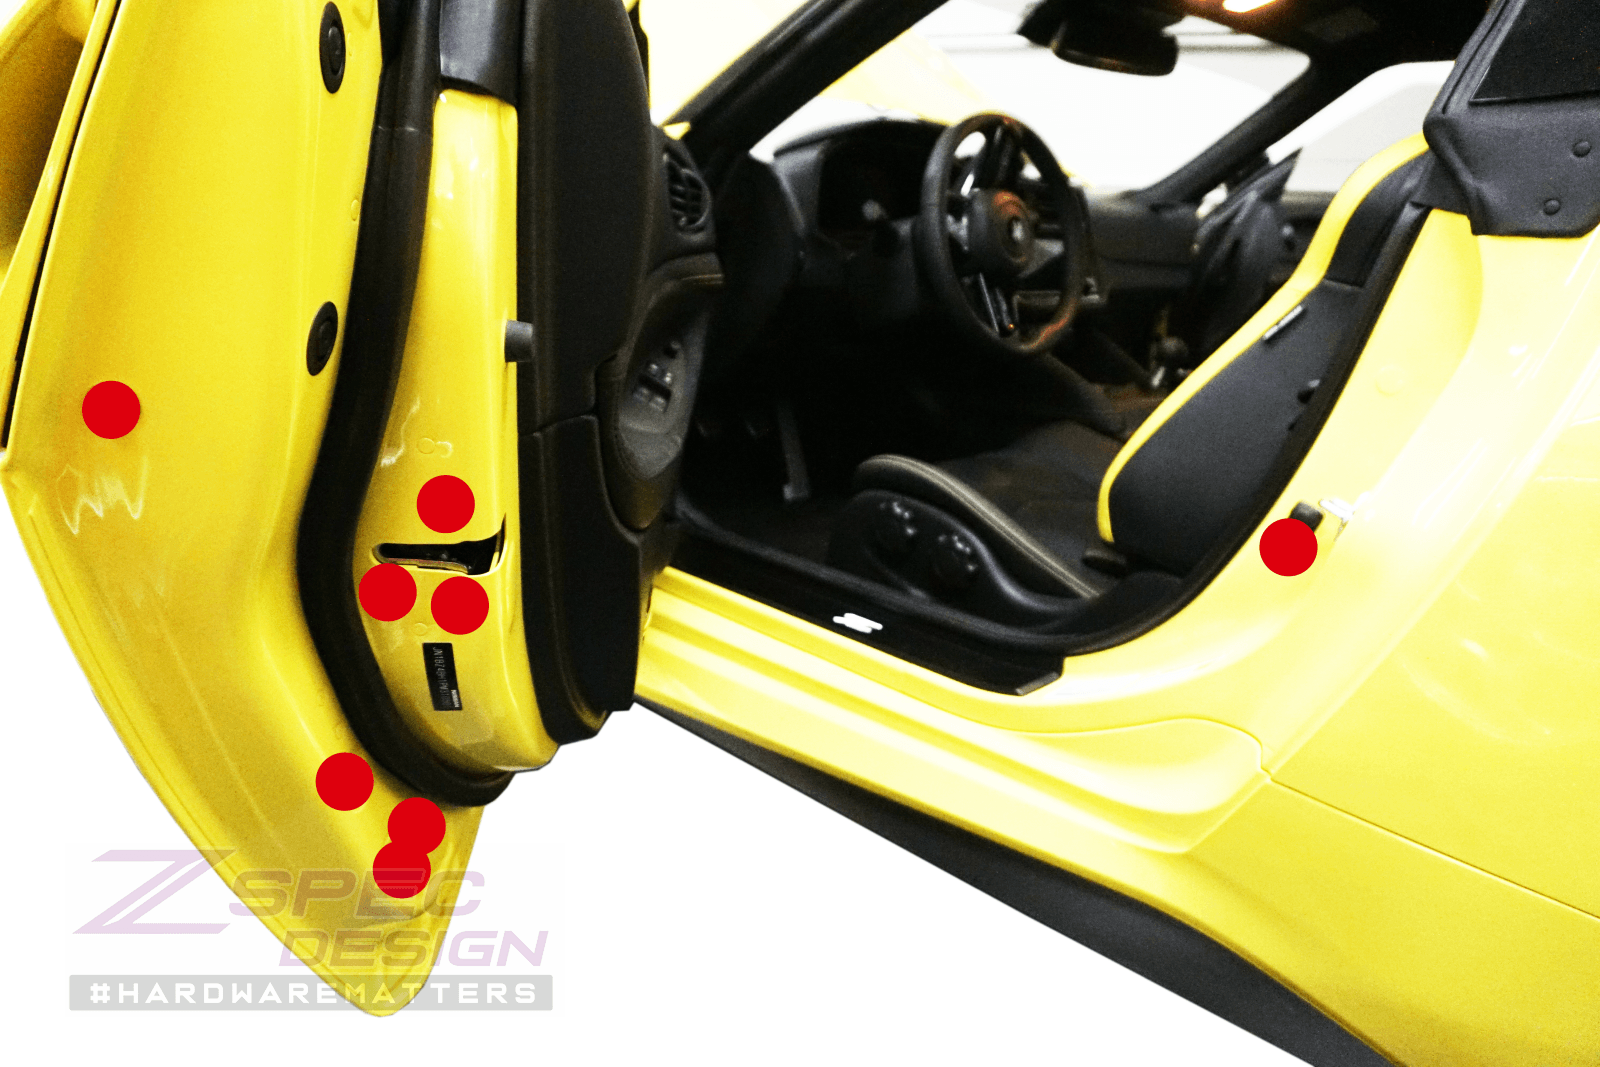 ZSPEC Dress Up Bolts® Fastener Kit, Door Jams Area for Datsun